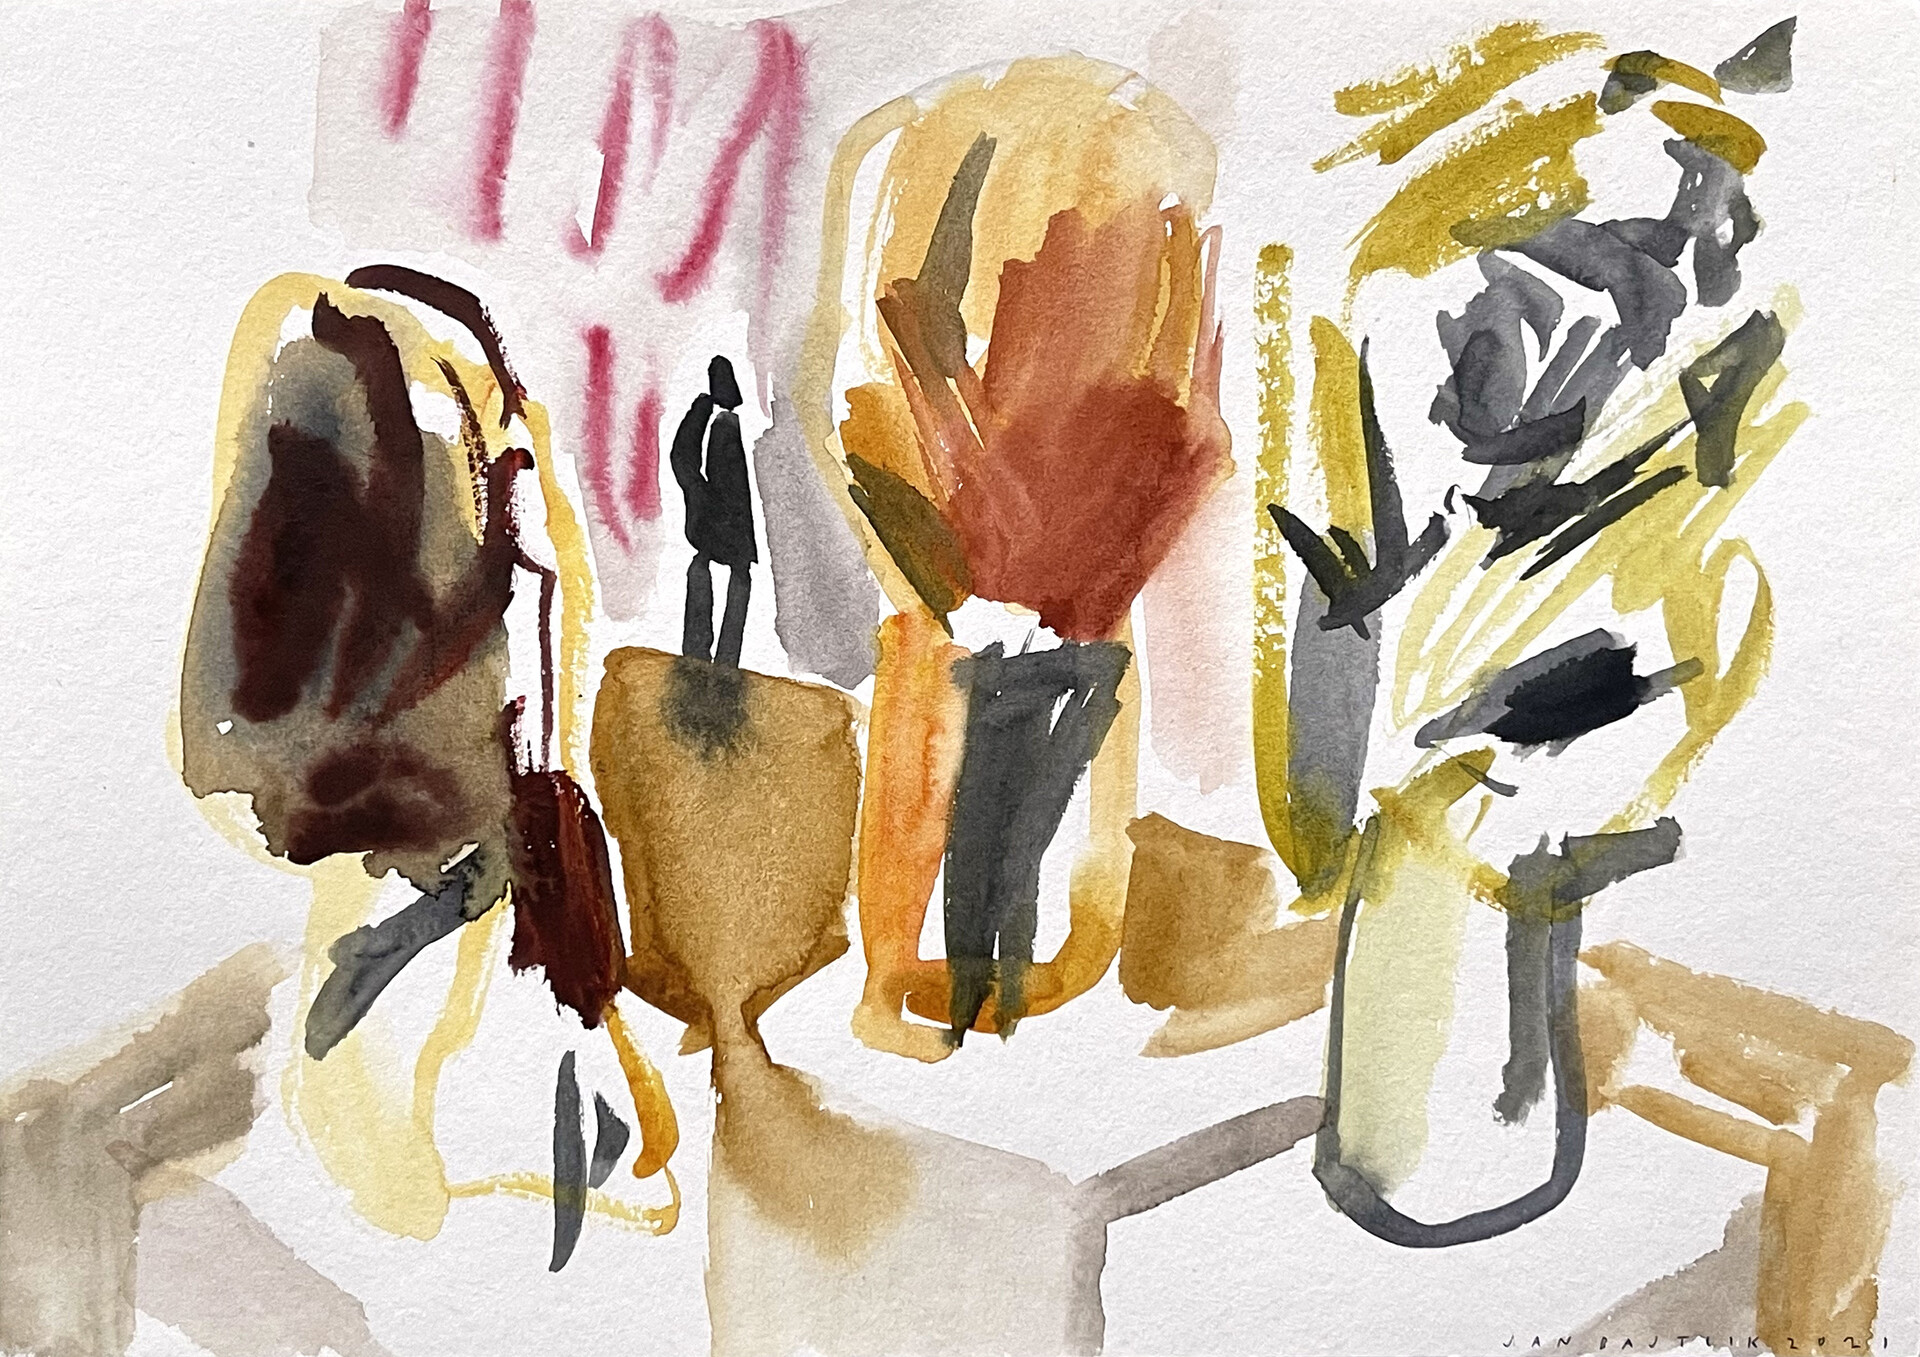 “Dresden Frauen” inspired by Georg Baselitz work, presented on the Centre Pompidou exhibition “Baselitz - La rétrospective”, 21 x 29, 5 cm, watercolour on paper, 2021